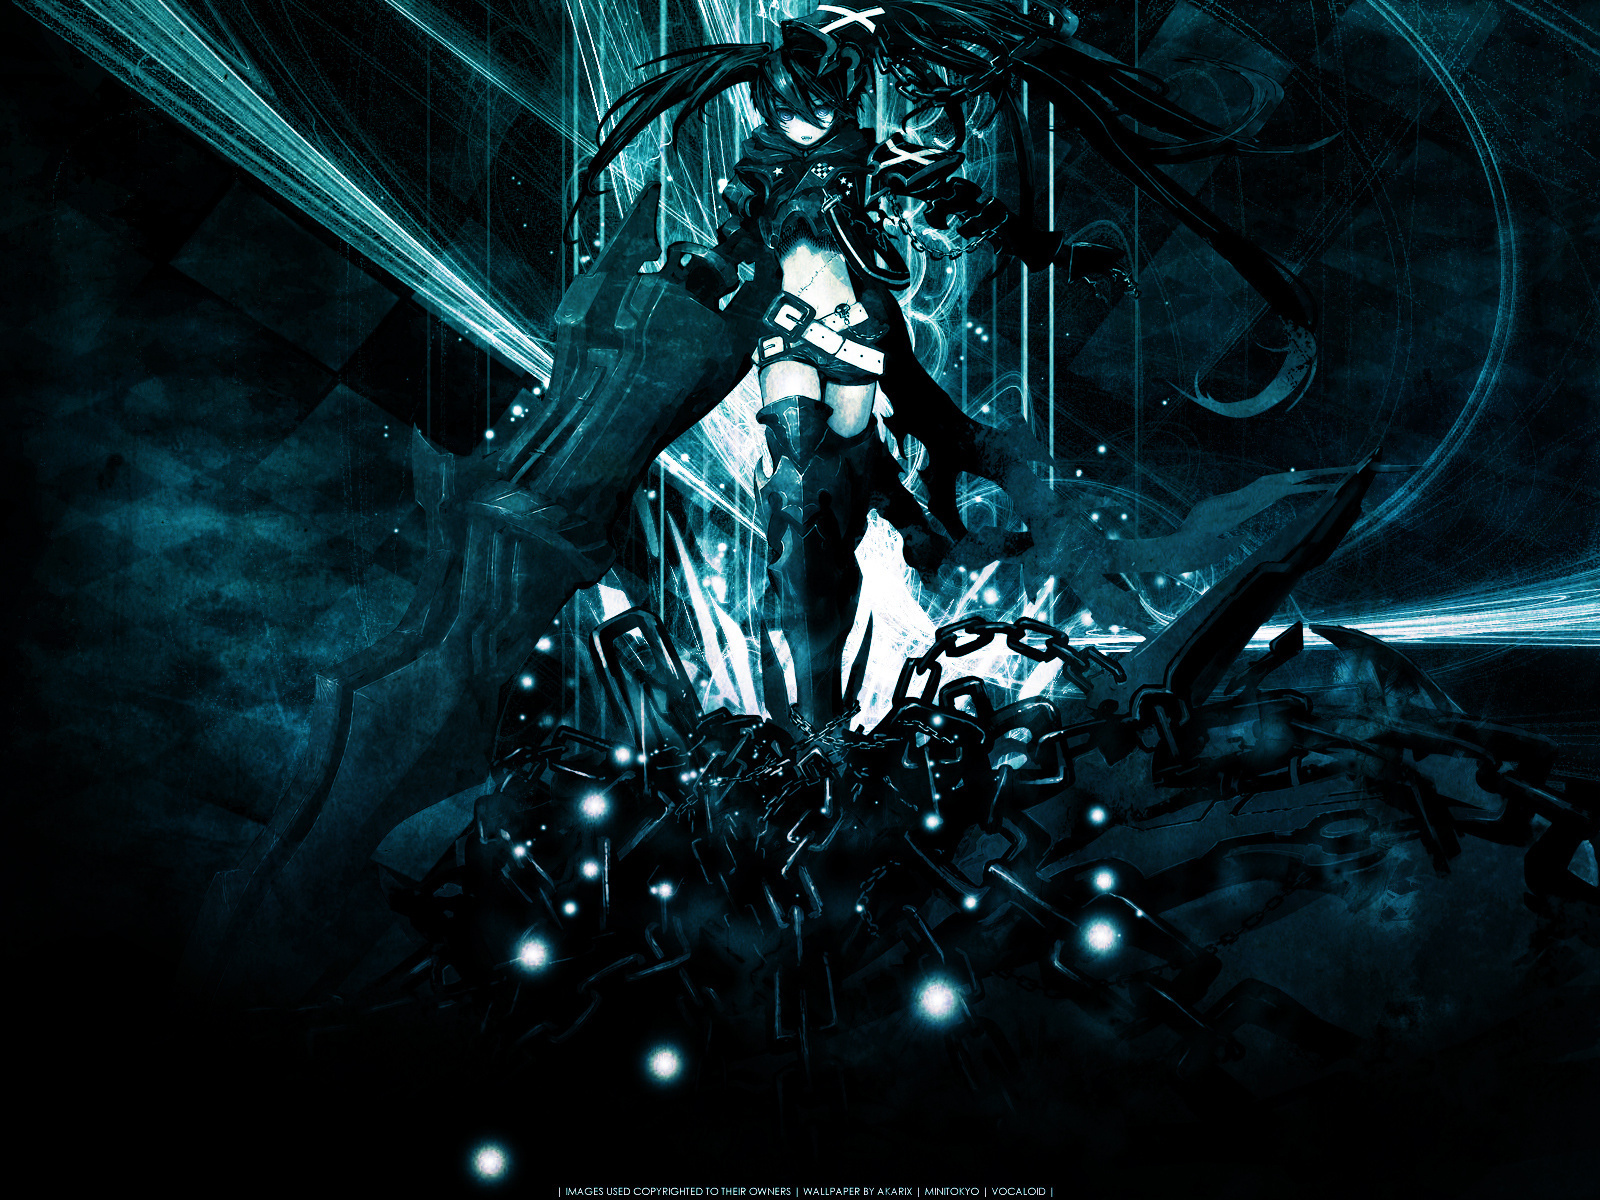 dark anime wallpaper,darkness,cg artwork,graphic design,digital compositing,fictional character